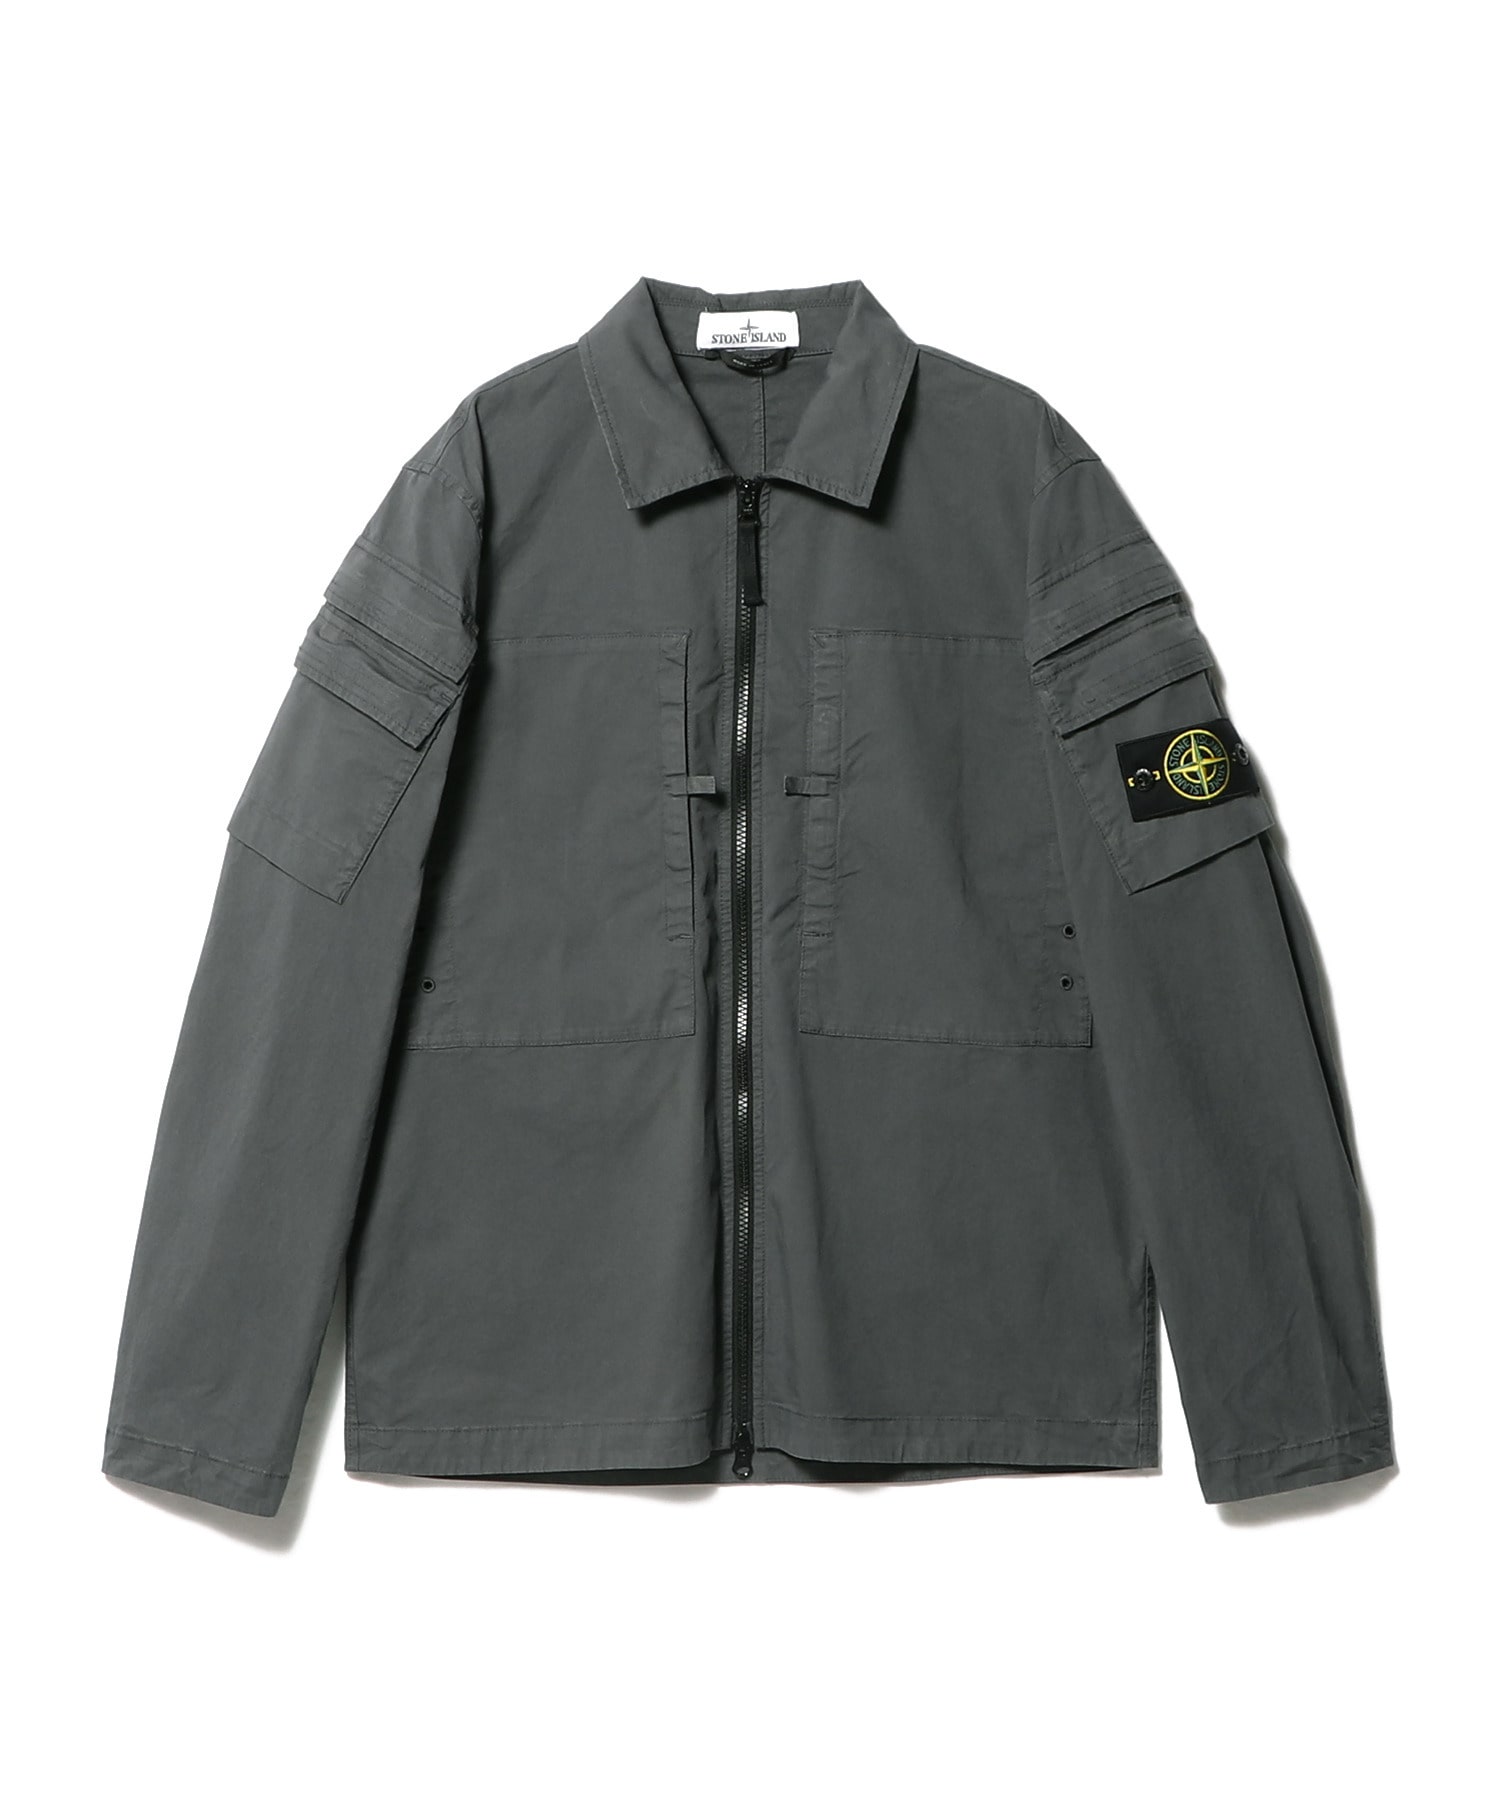 stone island zip shirt jacket 20ss肩幅46cm